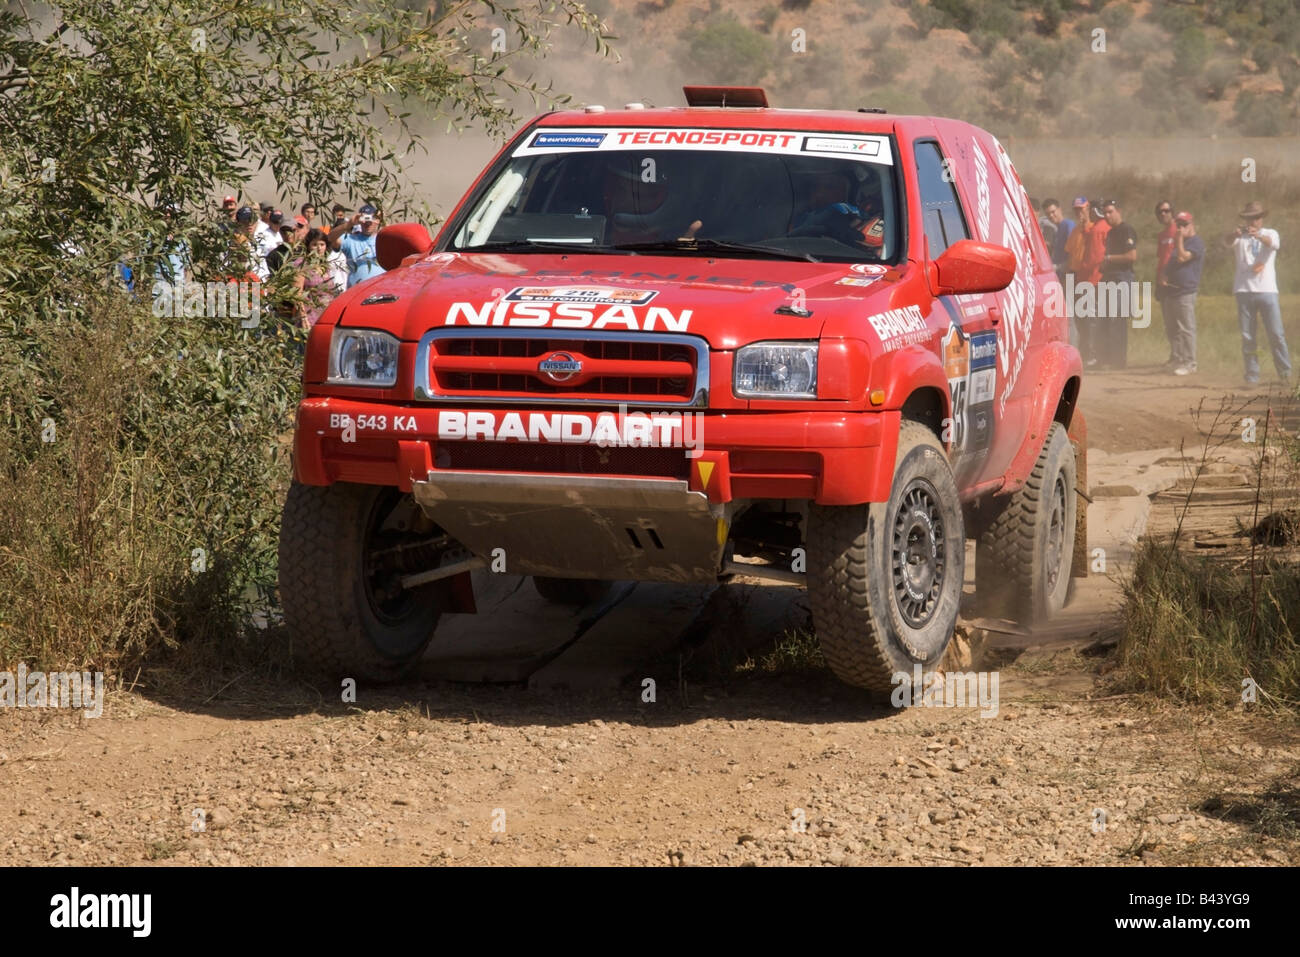 Pax-Rallye-Lisboa Portimão - Dakar Series - Auto 215 - Tecnosport-Team - Maurizio Traglio und Fabien Lurquin Stockfoto